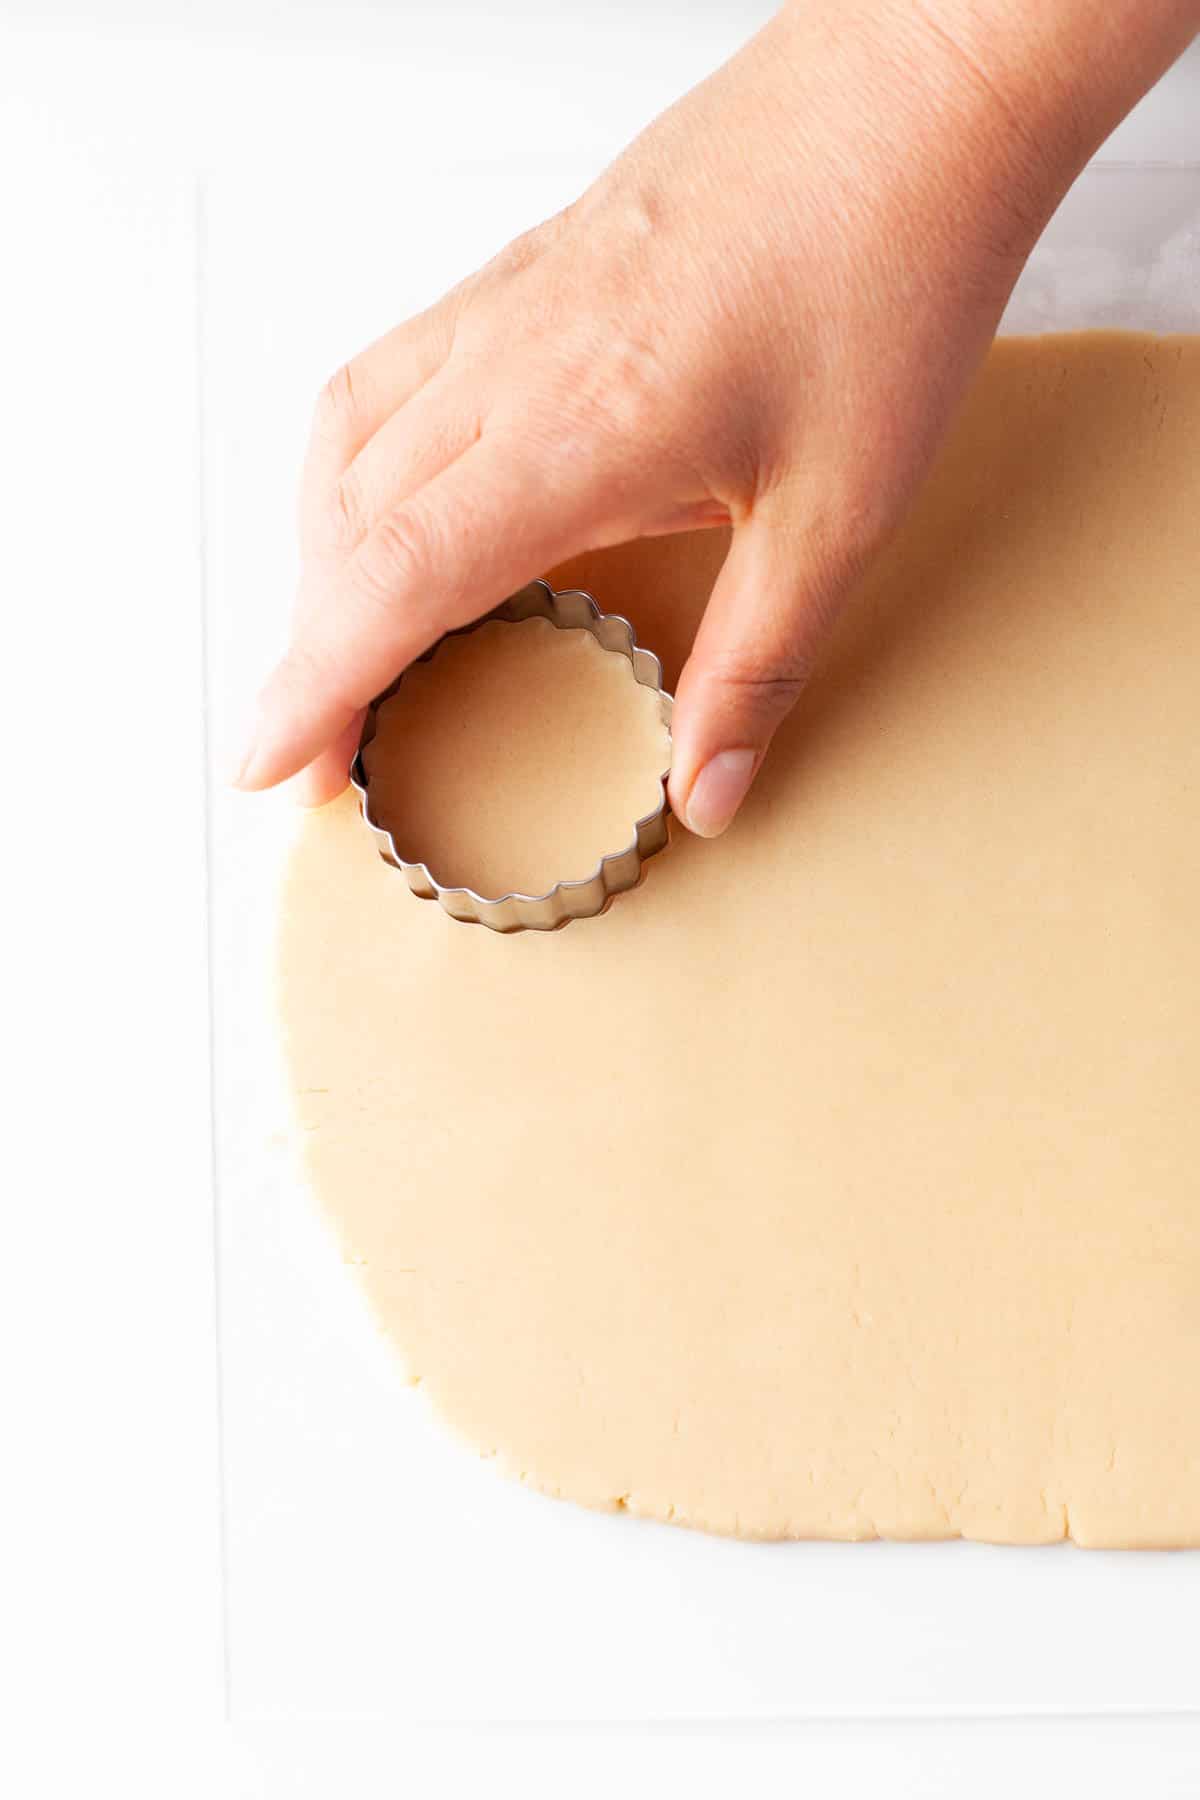 A person cutting dulce de leche cookie dough with a cookie cutter.